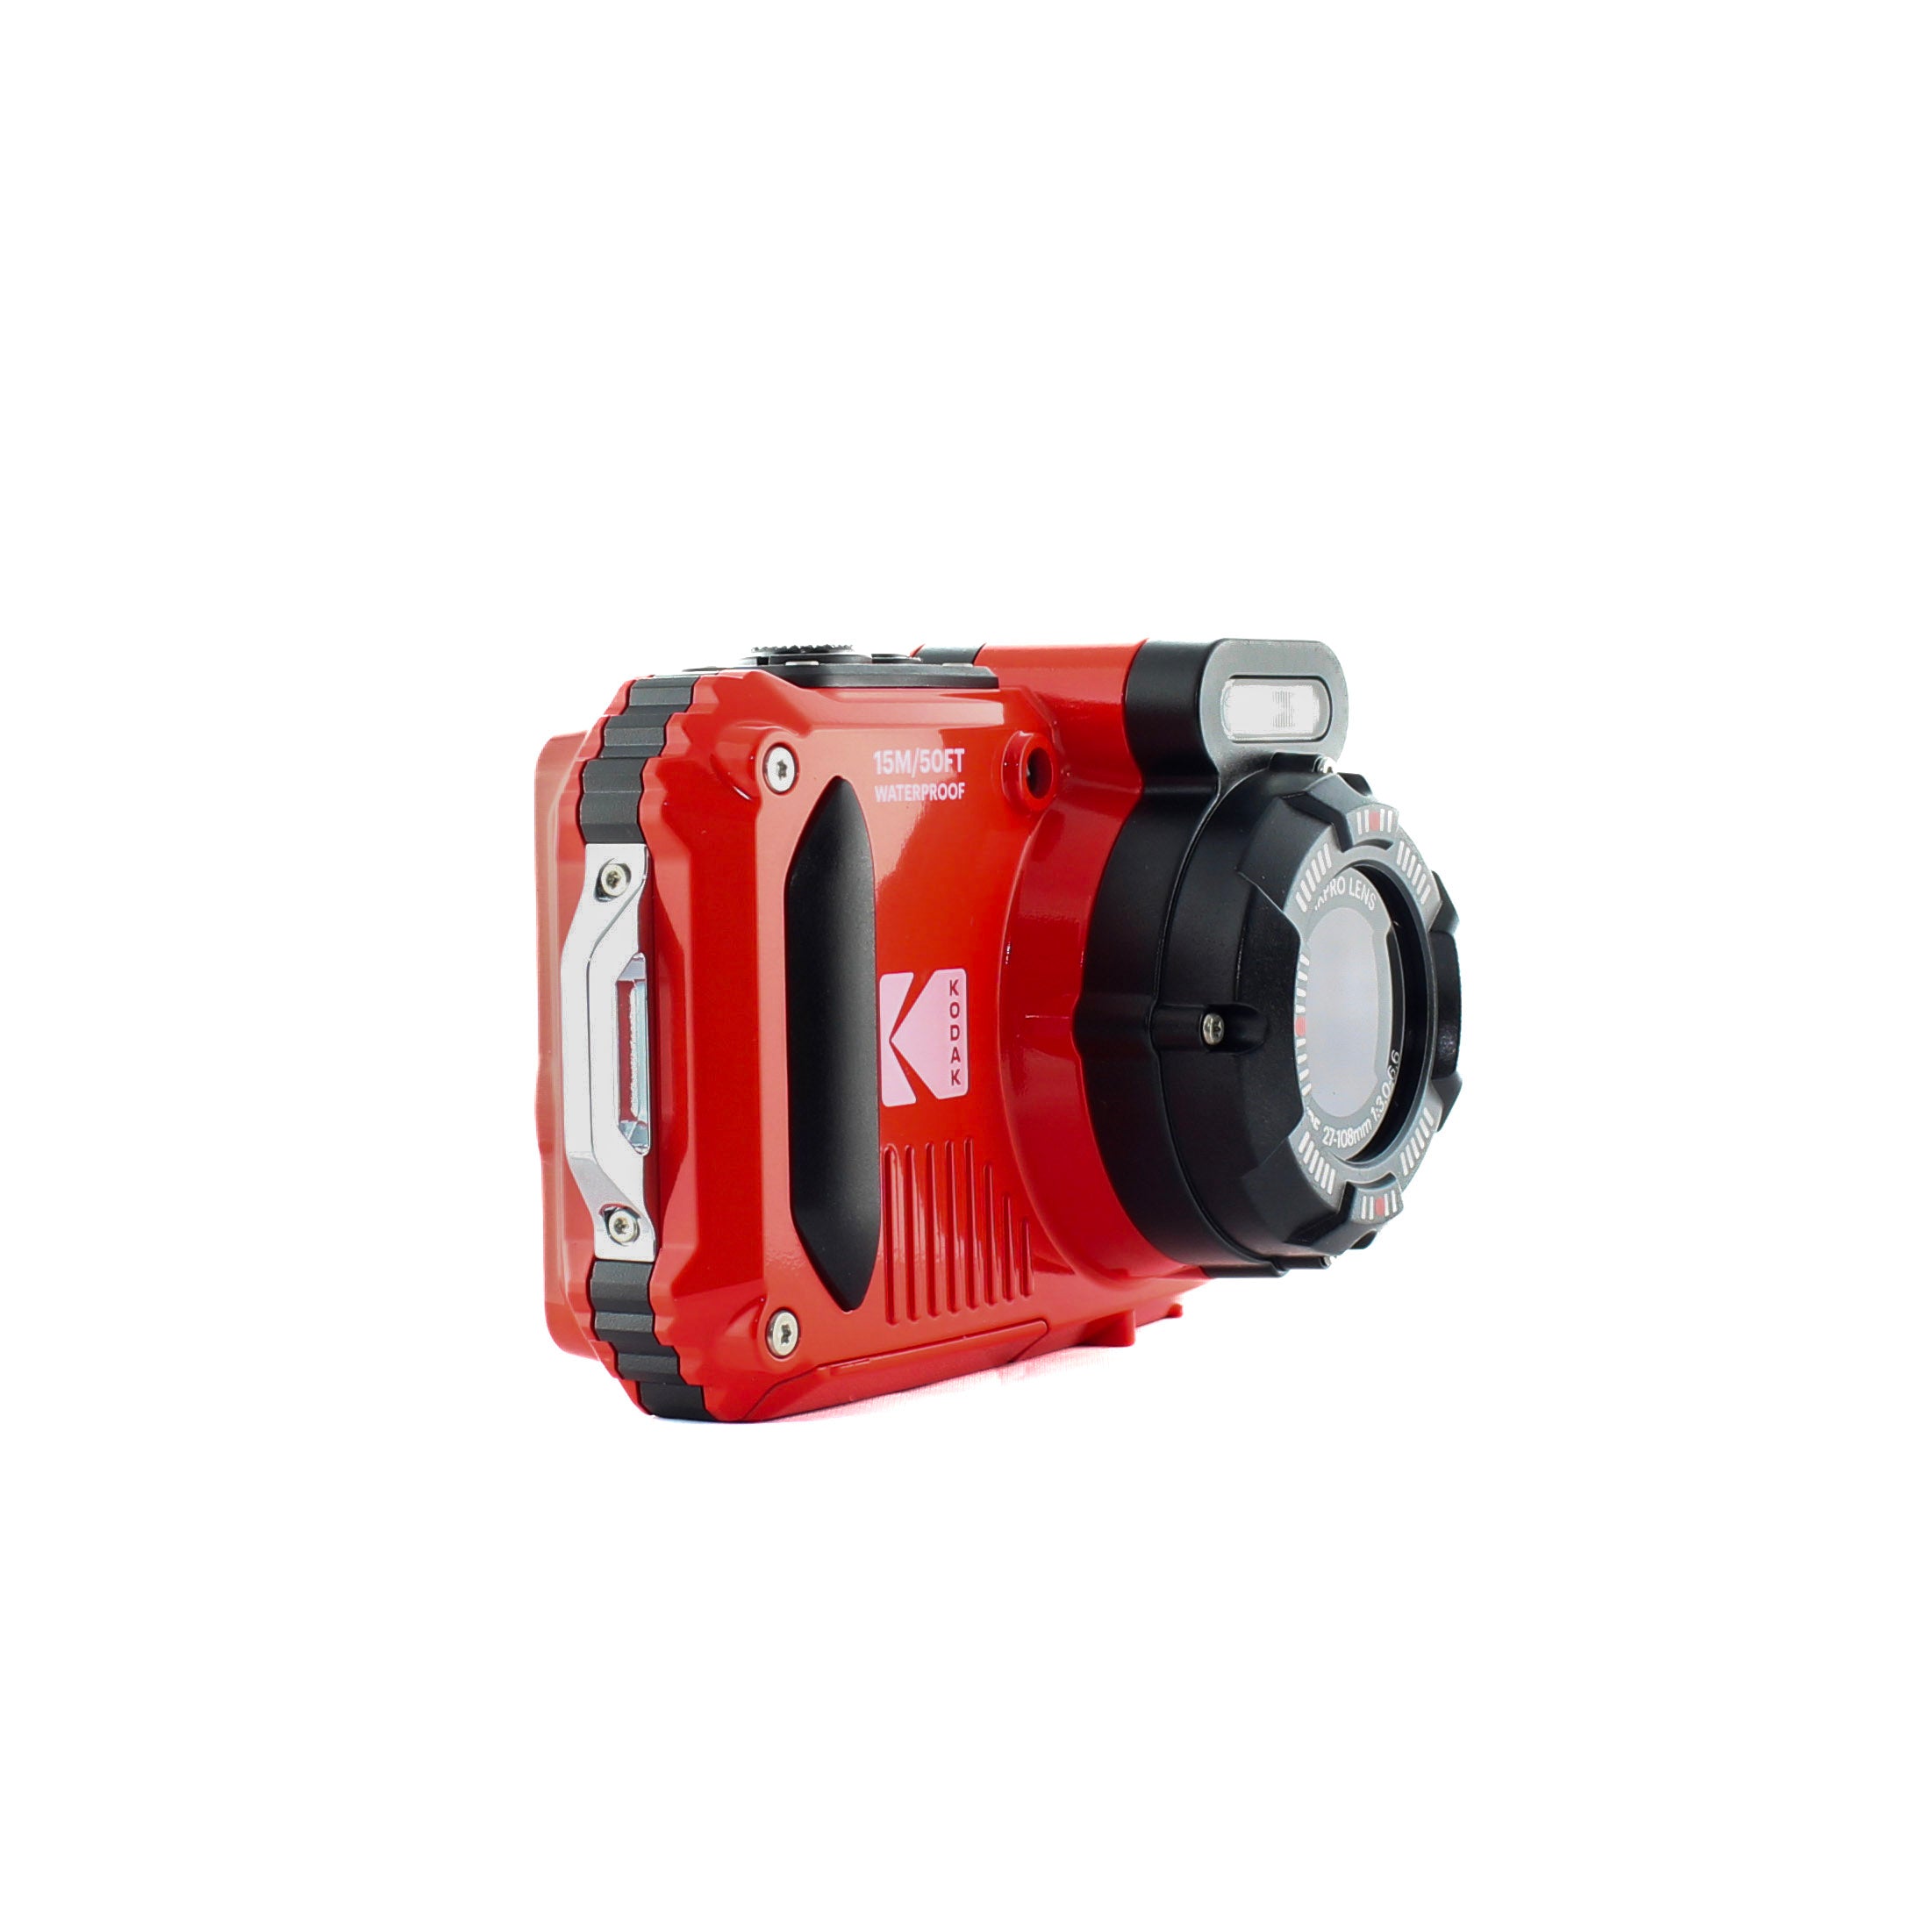 Kodak Pixpro WPZ2 Underwater Camera